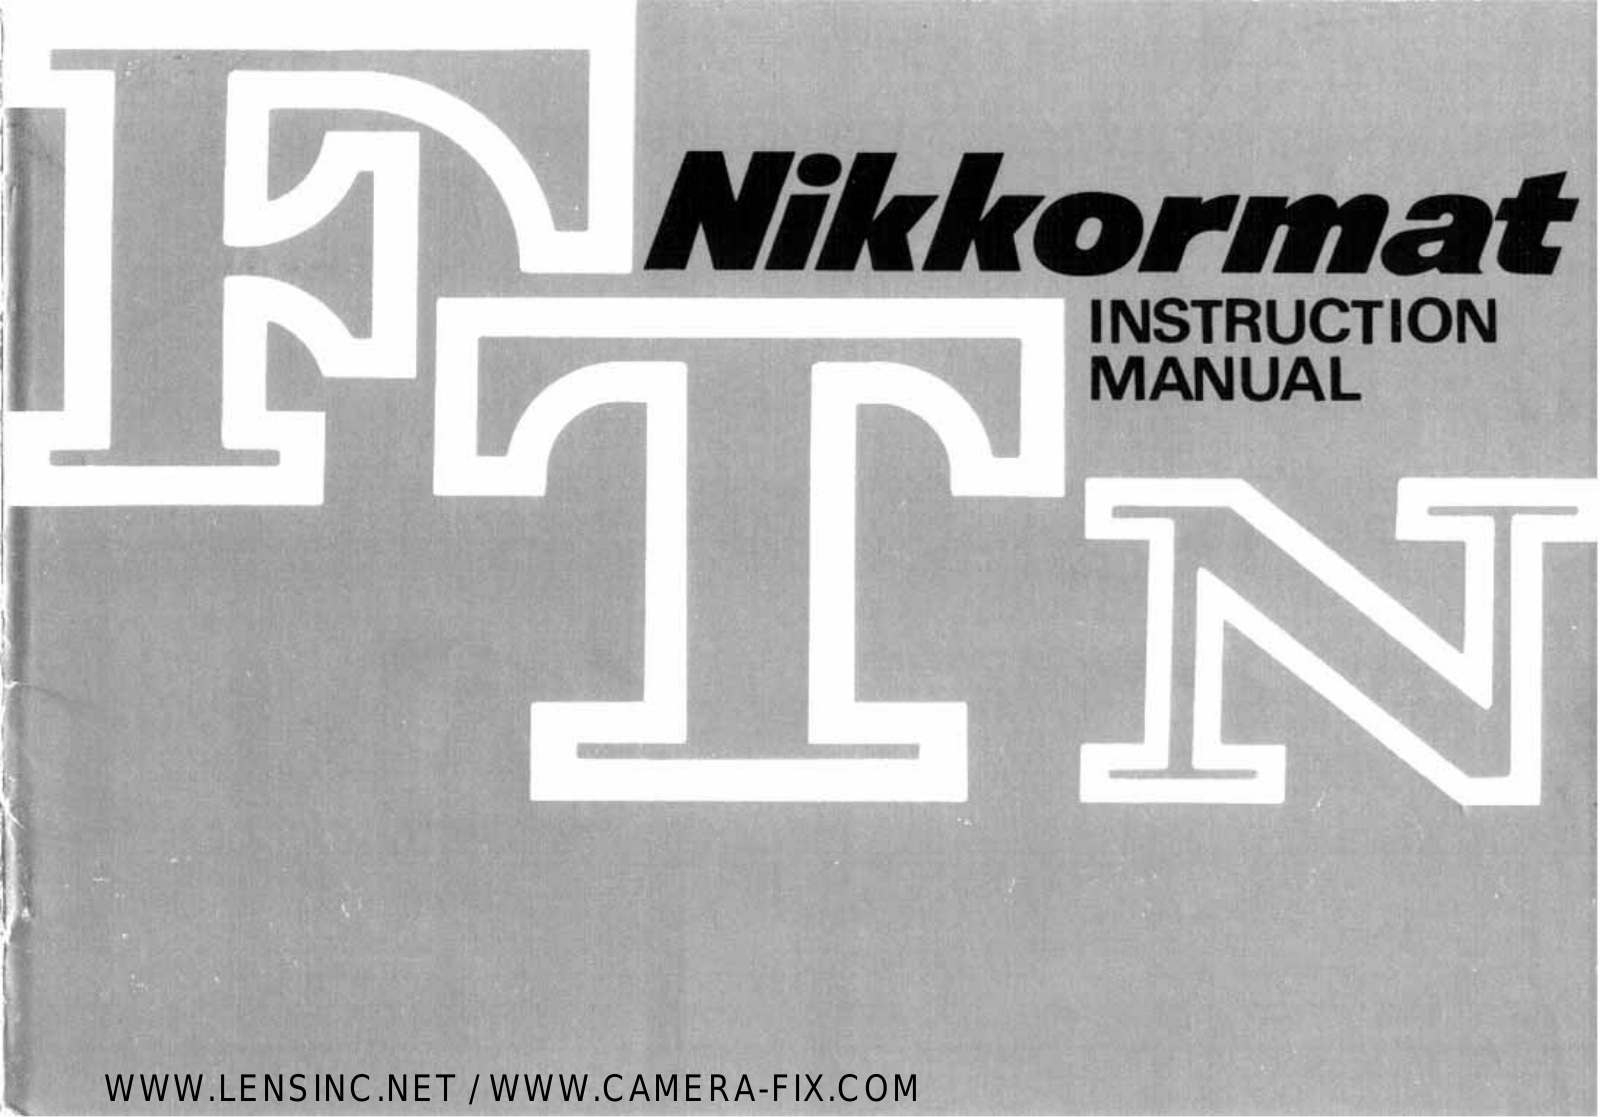 Nikon FTN NIKKORMAT INSTRUCTION MANUAL